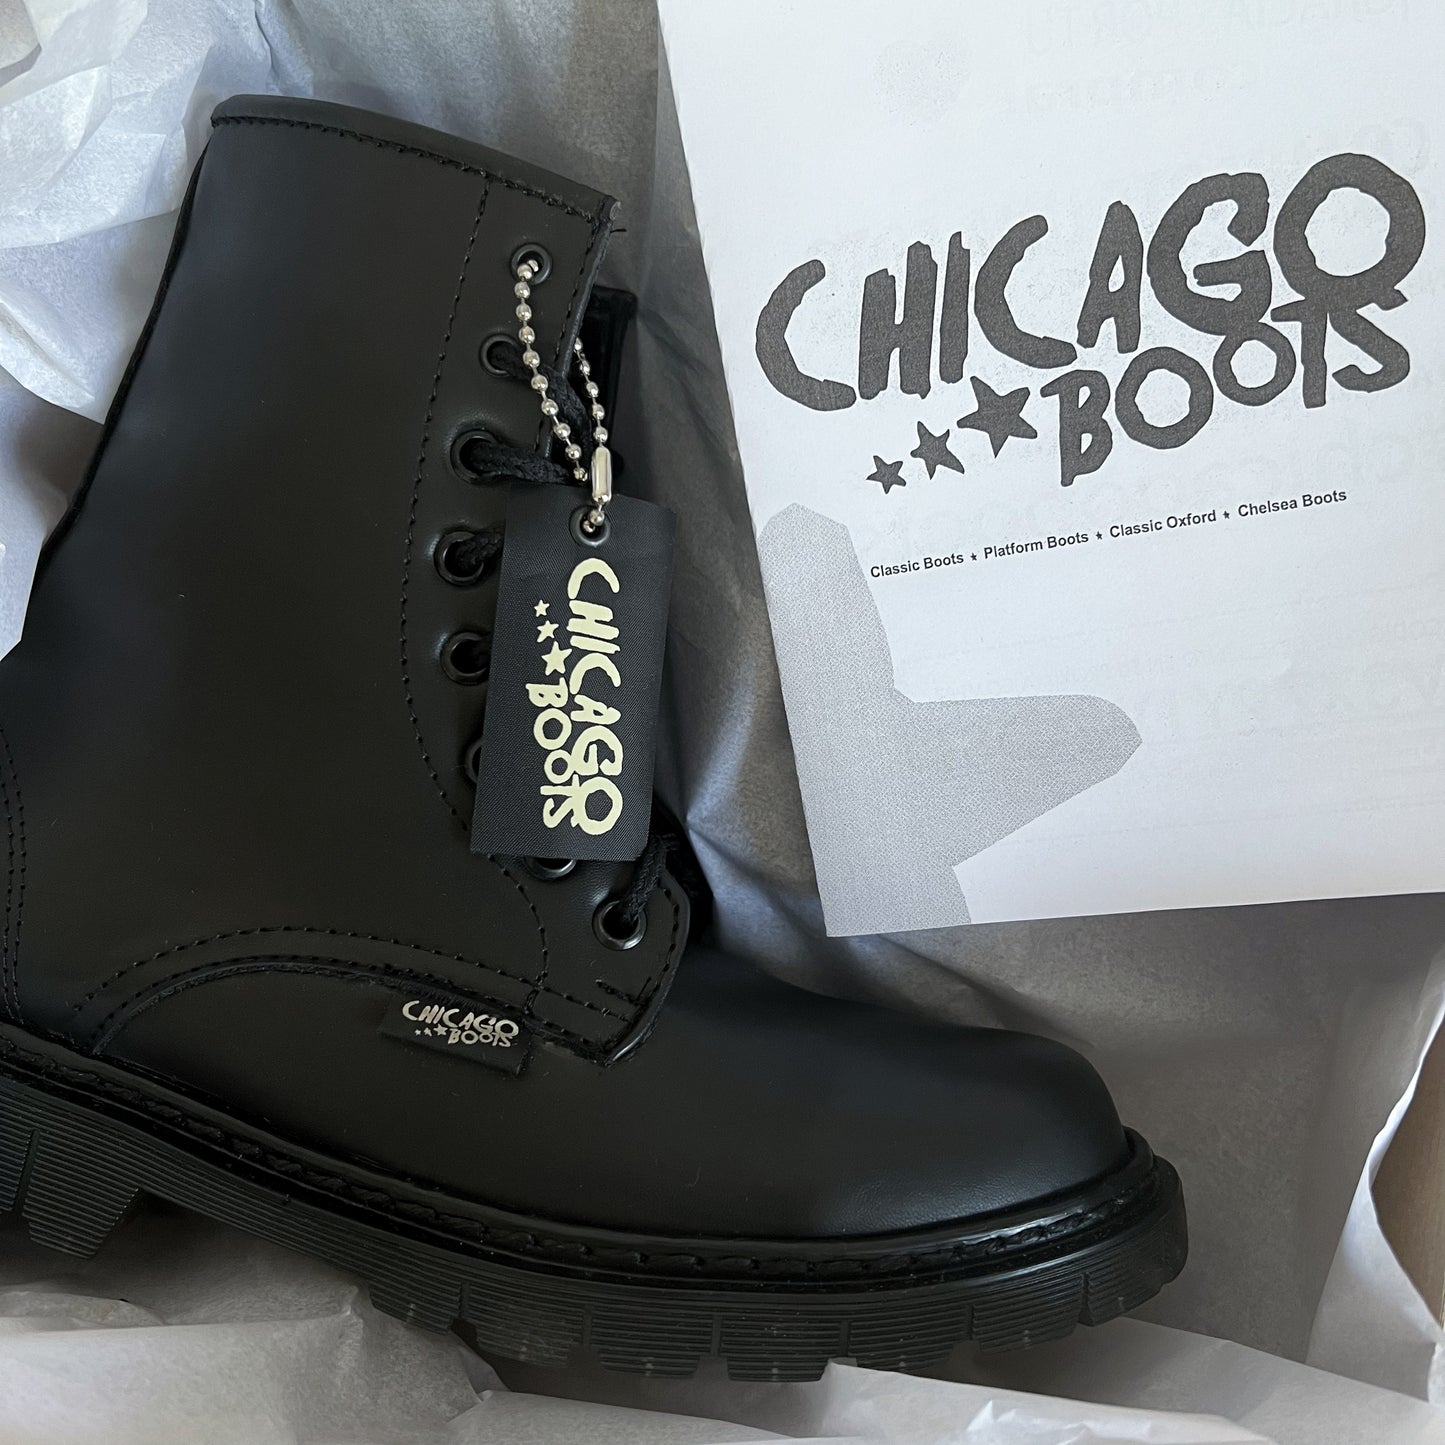 Classic Boots Full Black